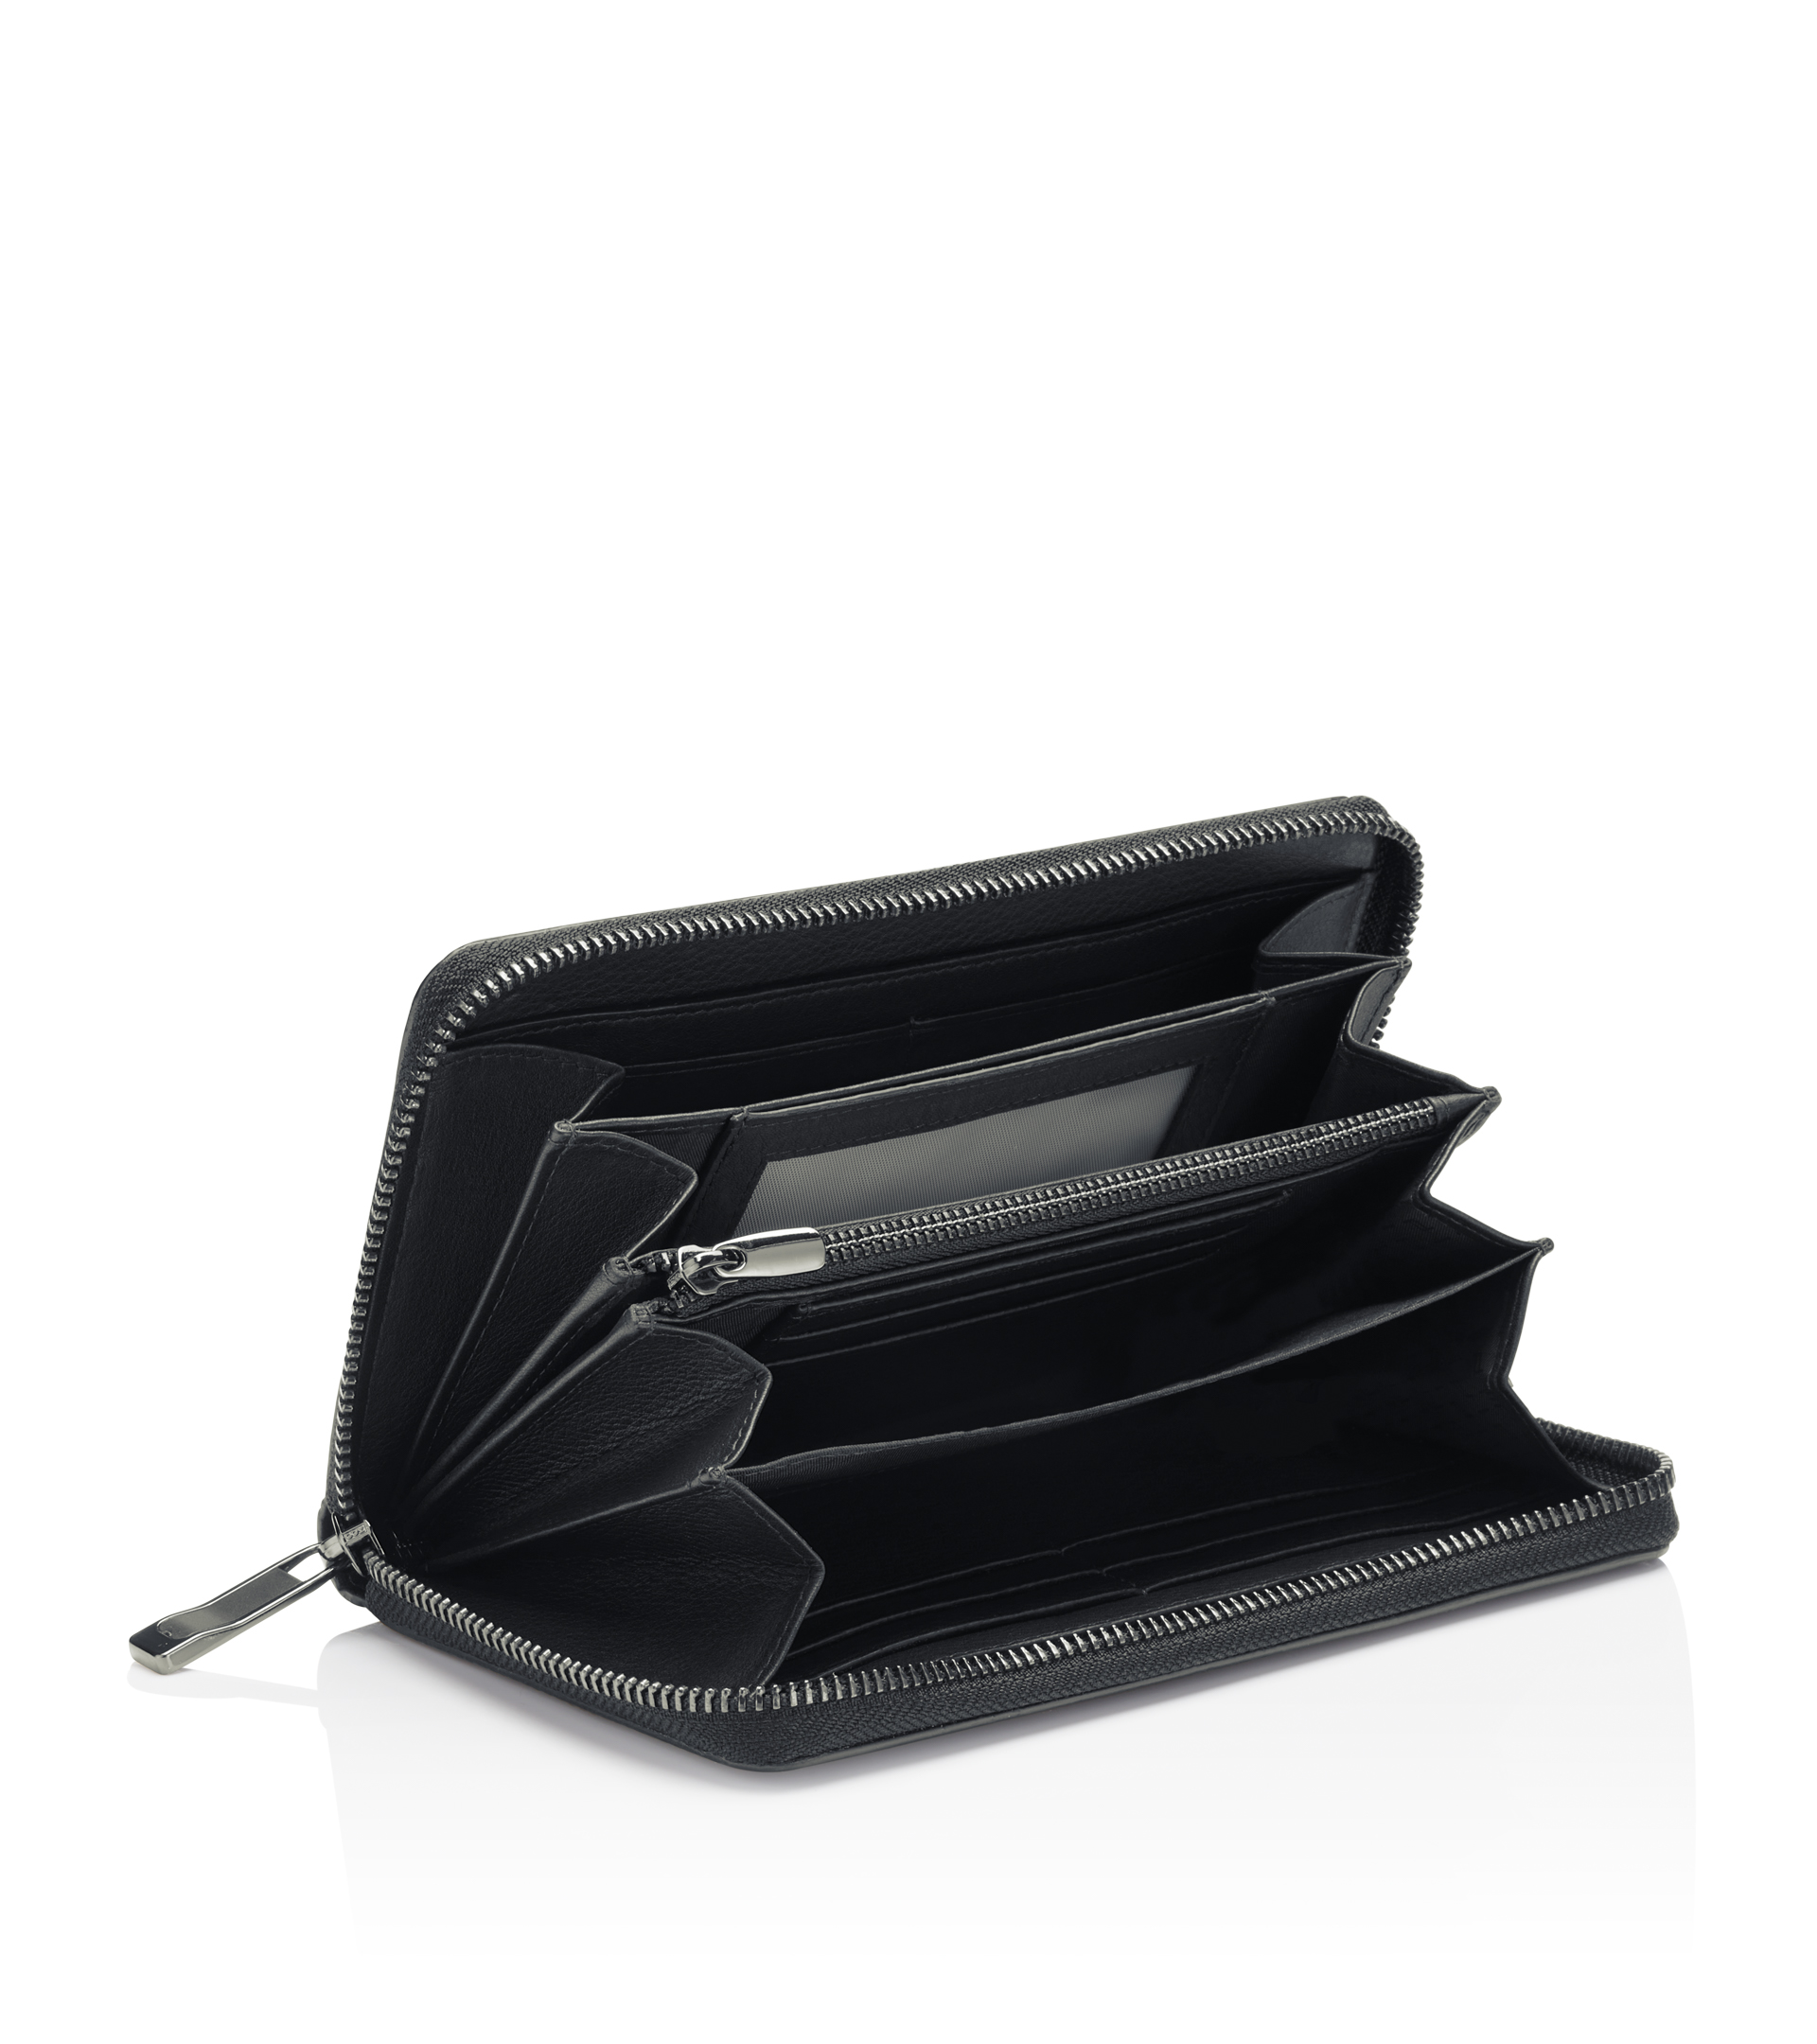 Business Wallet 15 with Zipper - Luxury Wallets for Men | Porsche